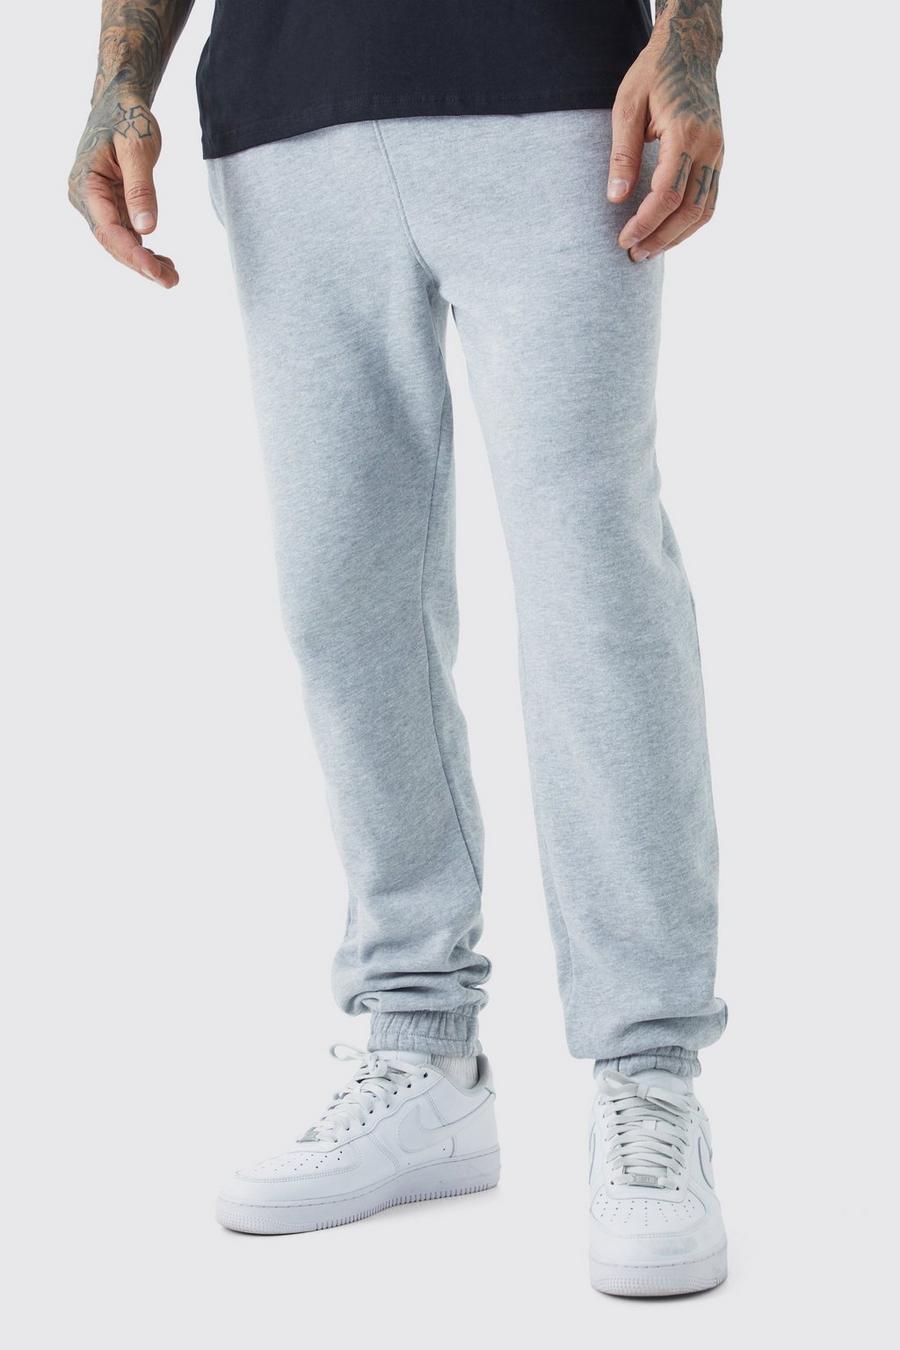 Pantalón deportivo Tall básico, Grey marl